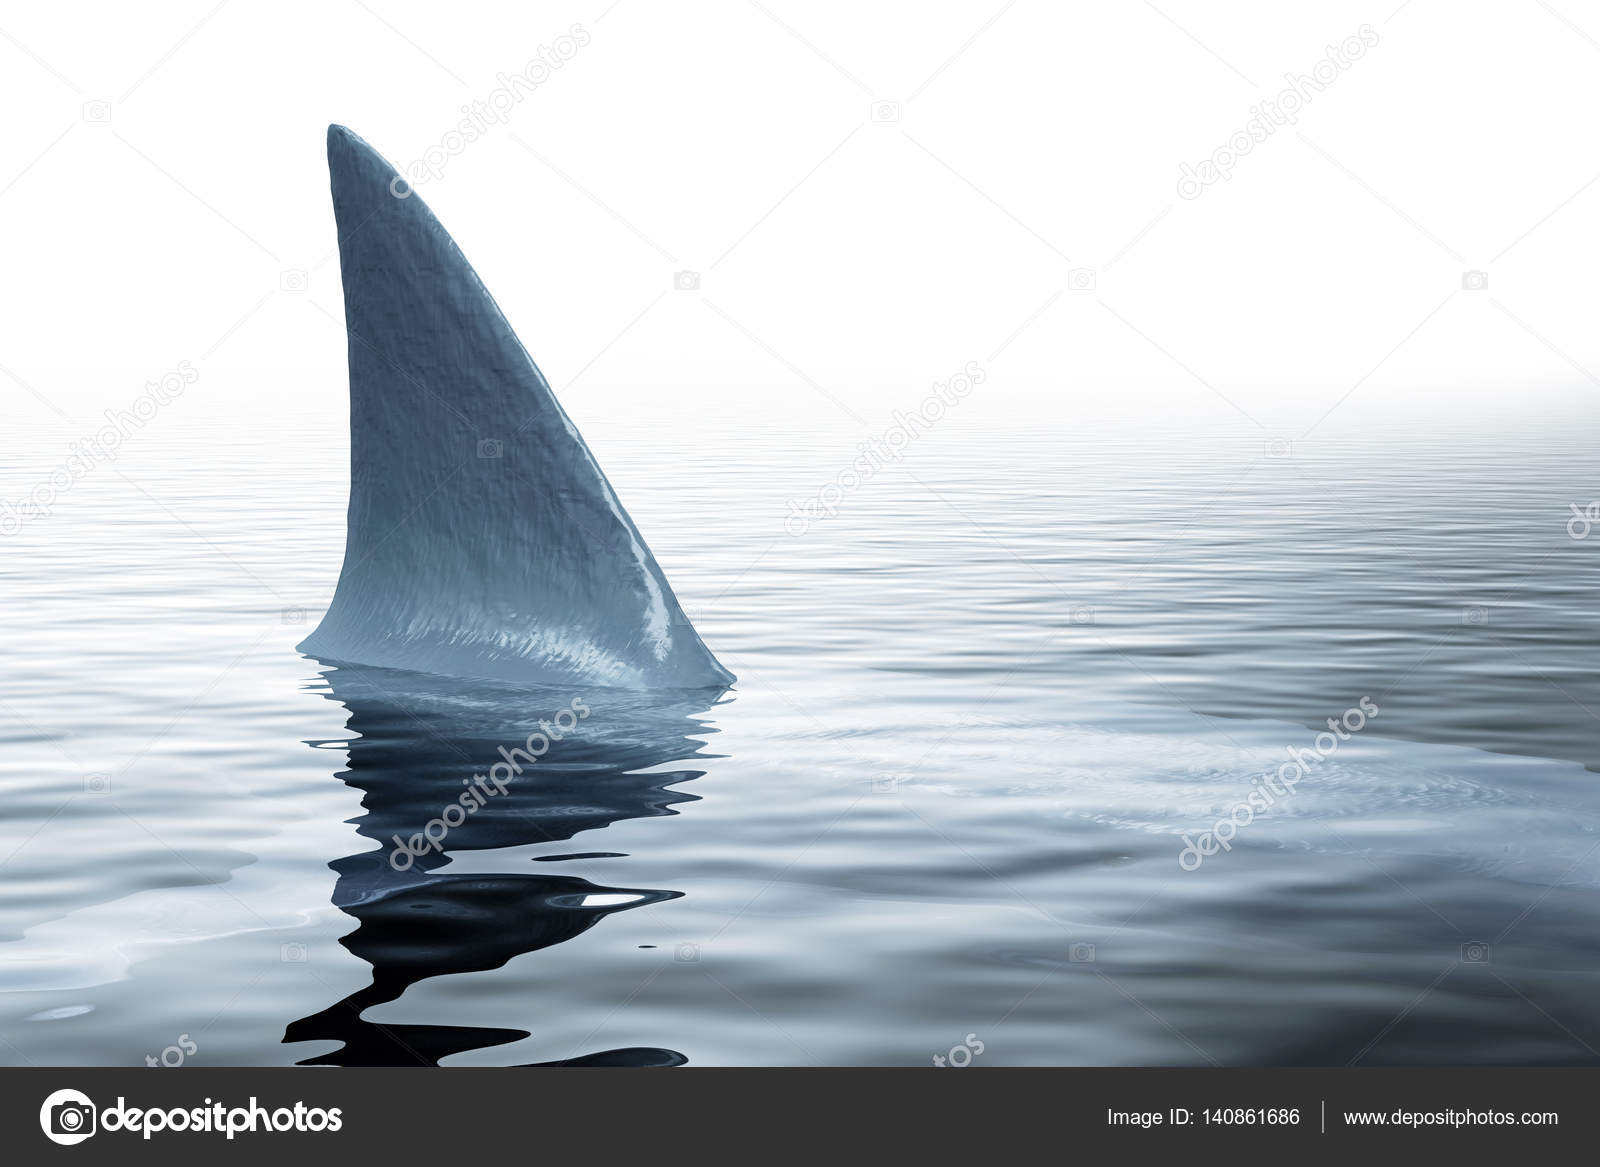 https://st3.depositphotos.com/1050267/14086/i/1600/depositphotos_140861686-stock-photo-shark-fin-in-sea.jpg